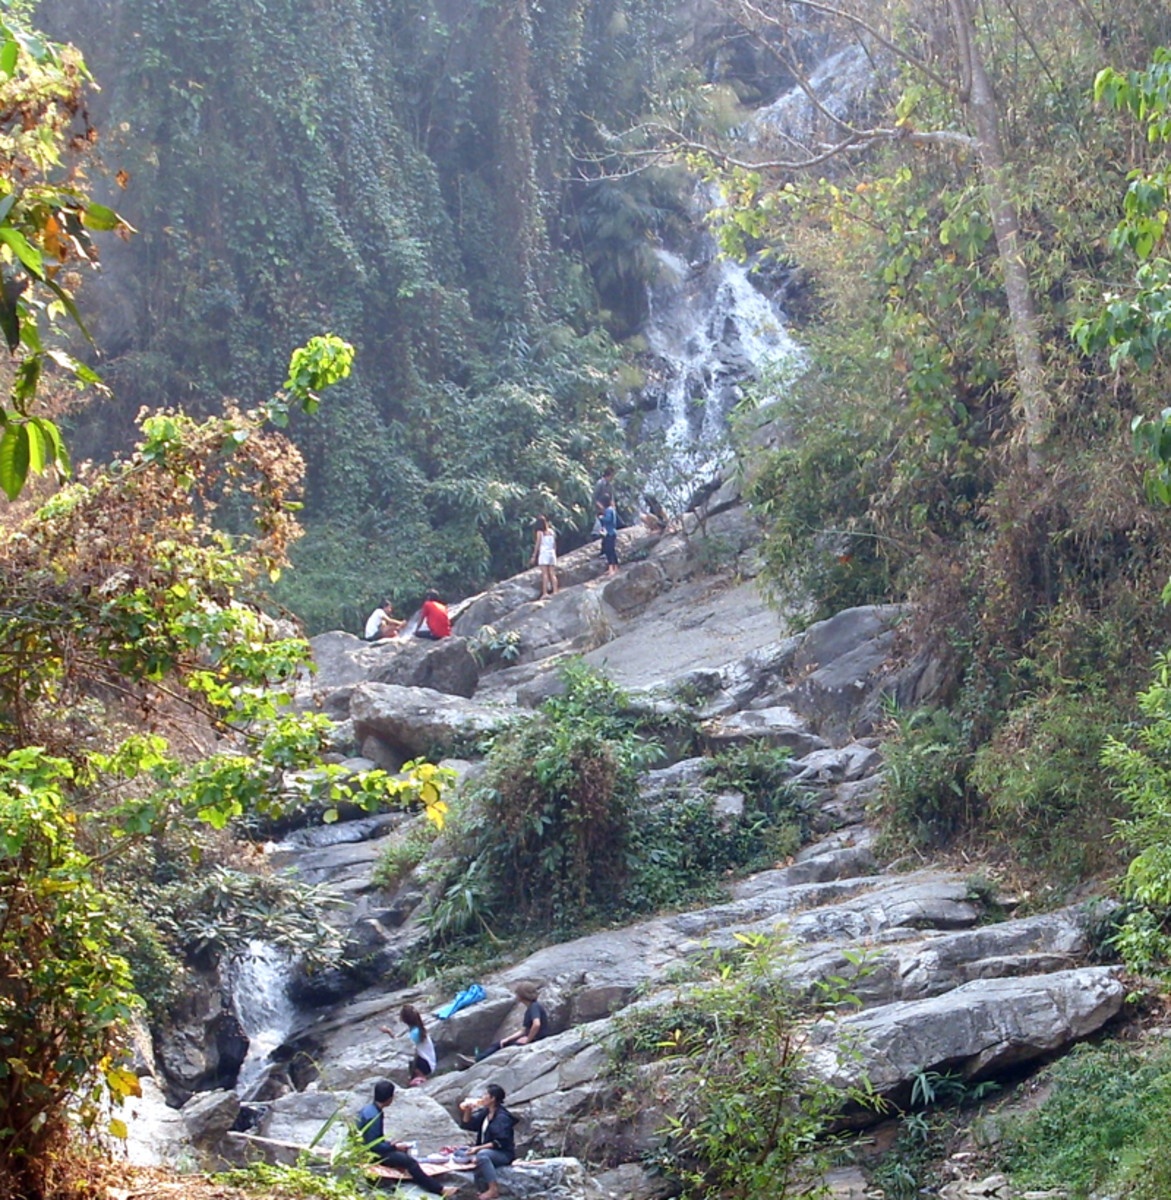 HuayKaew rock formations below the falls